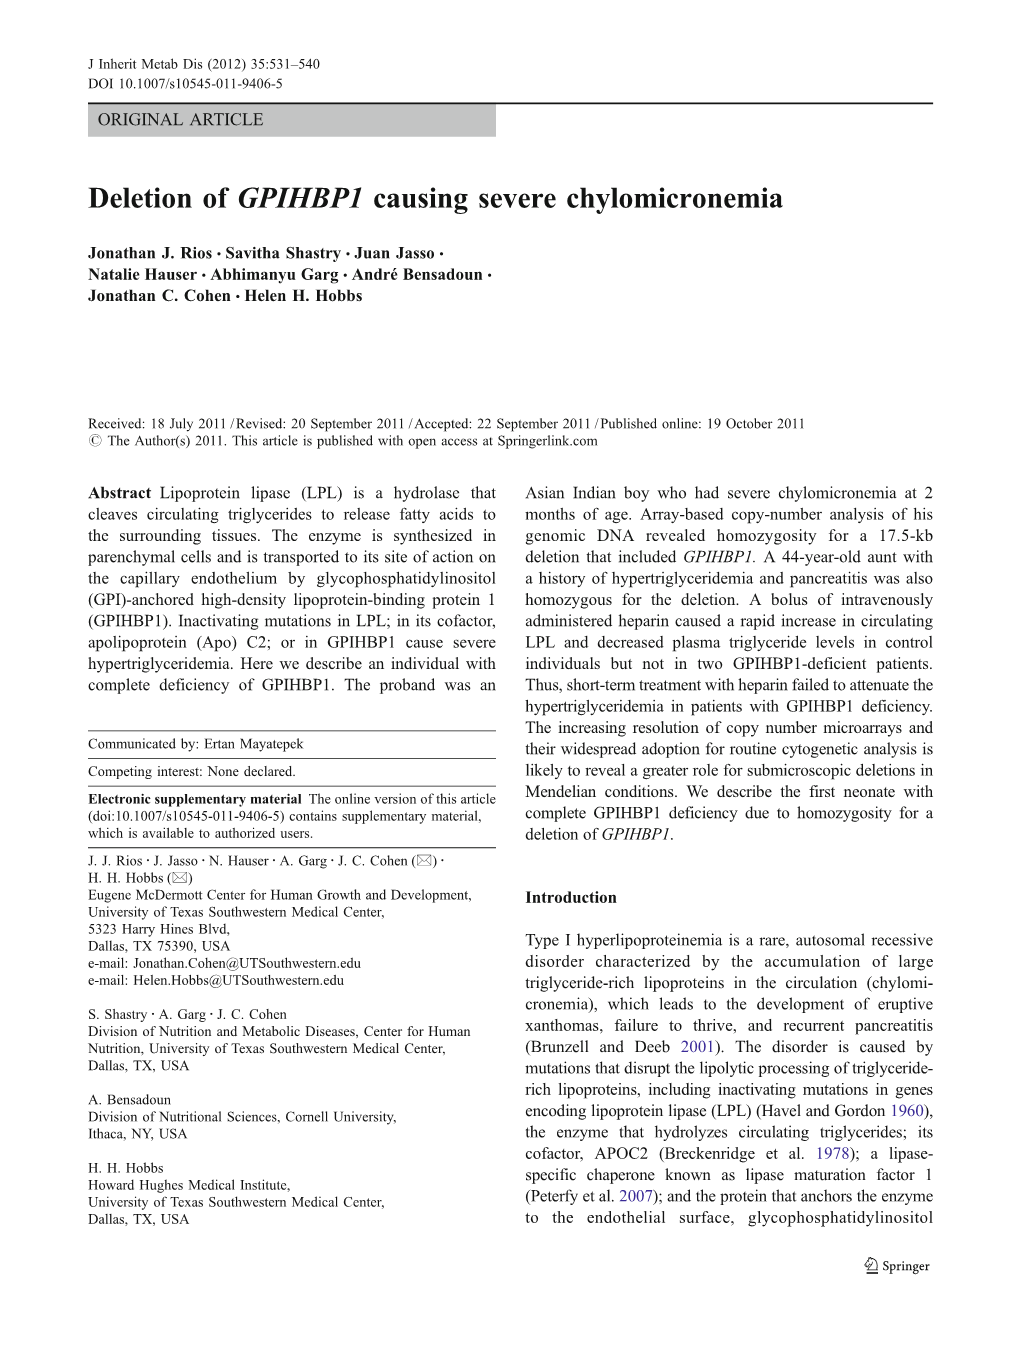 Deletion of GPIHBP1 Causing Severe Chylomicronemia